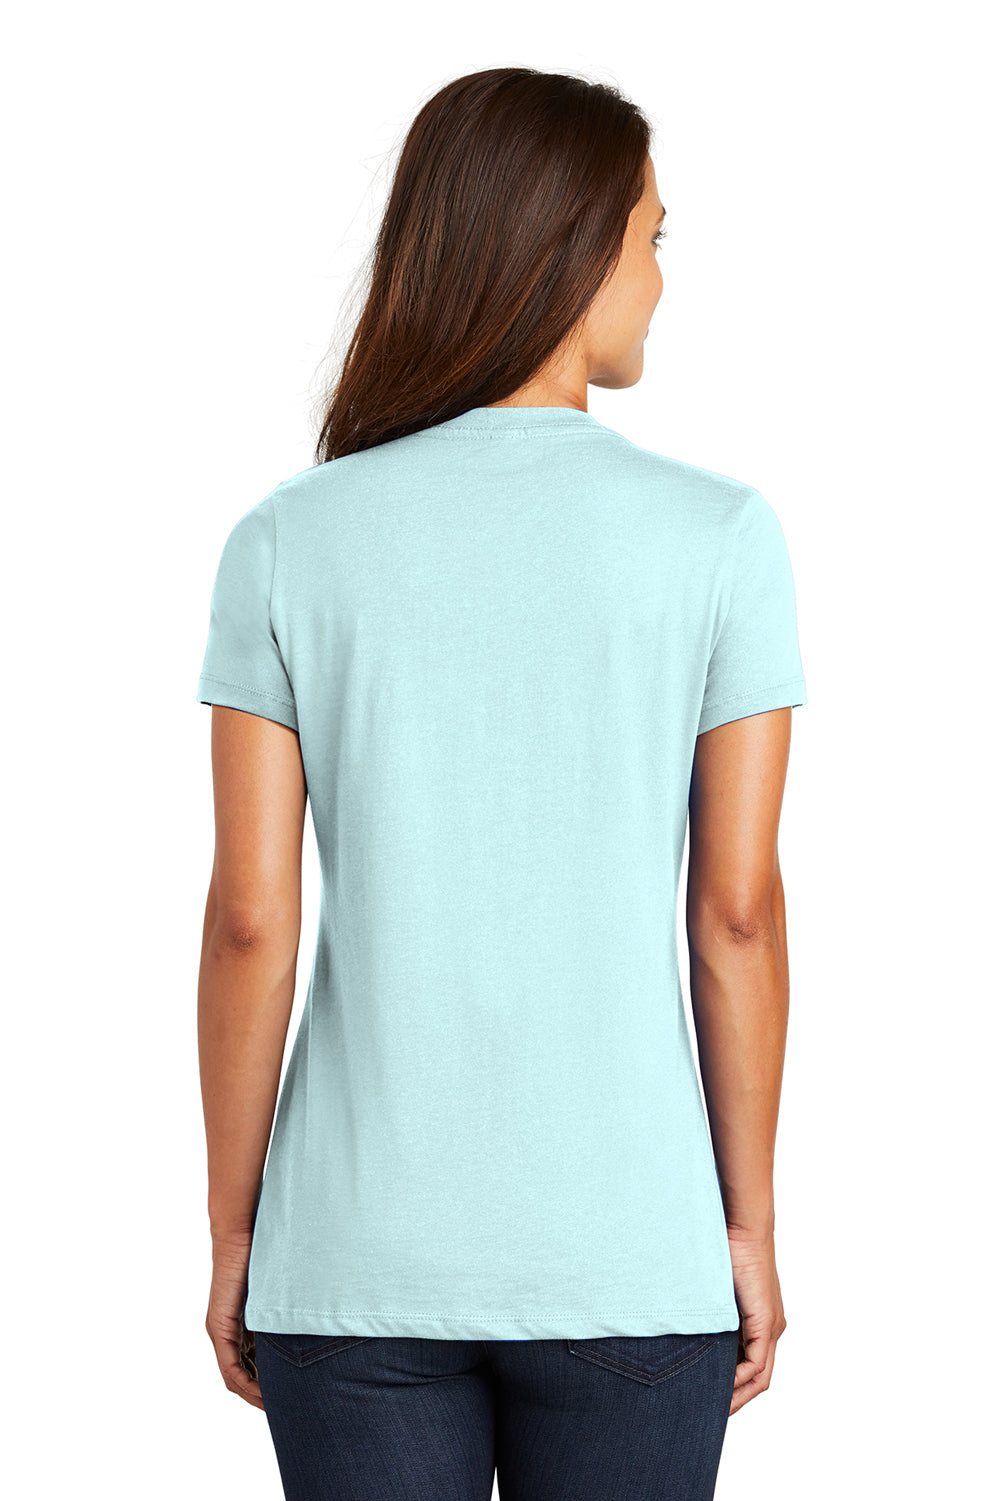 District DM1170L Womens Perfect Weight Short Sleeve V-Neck T-Shirt Seaglass Blue Back